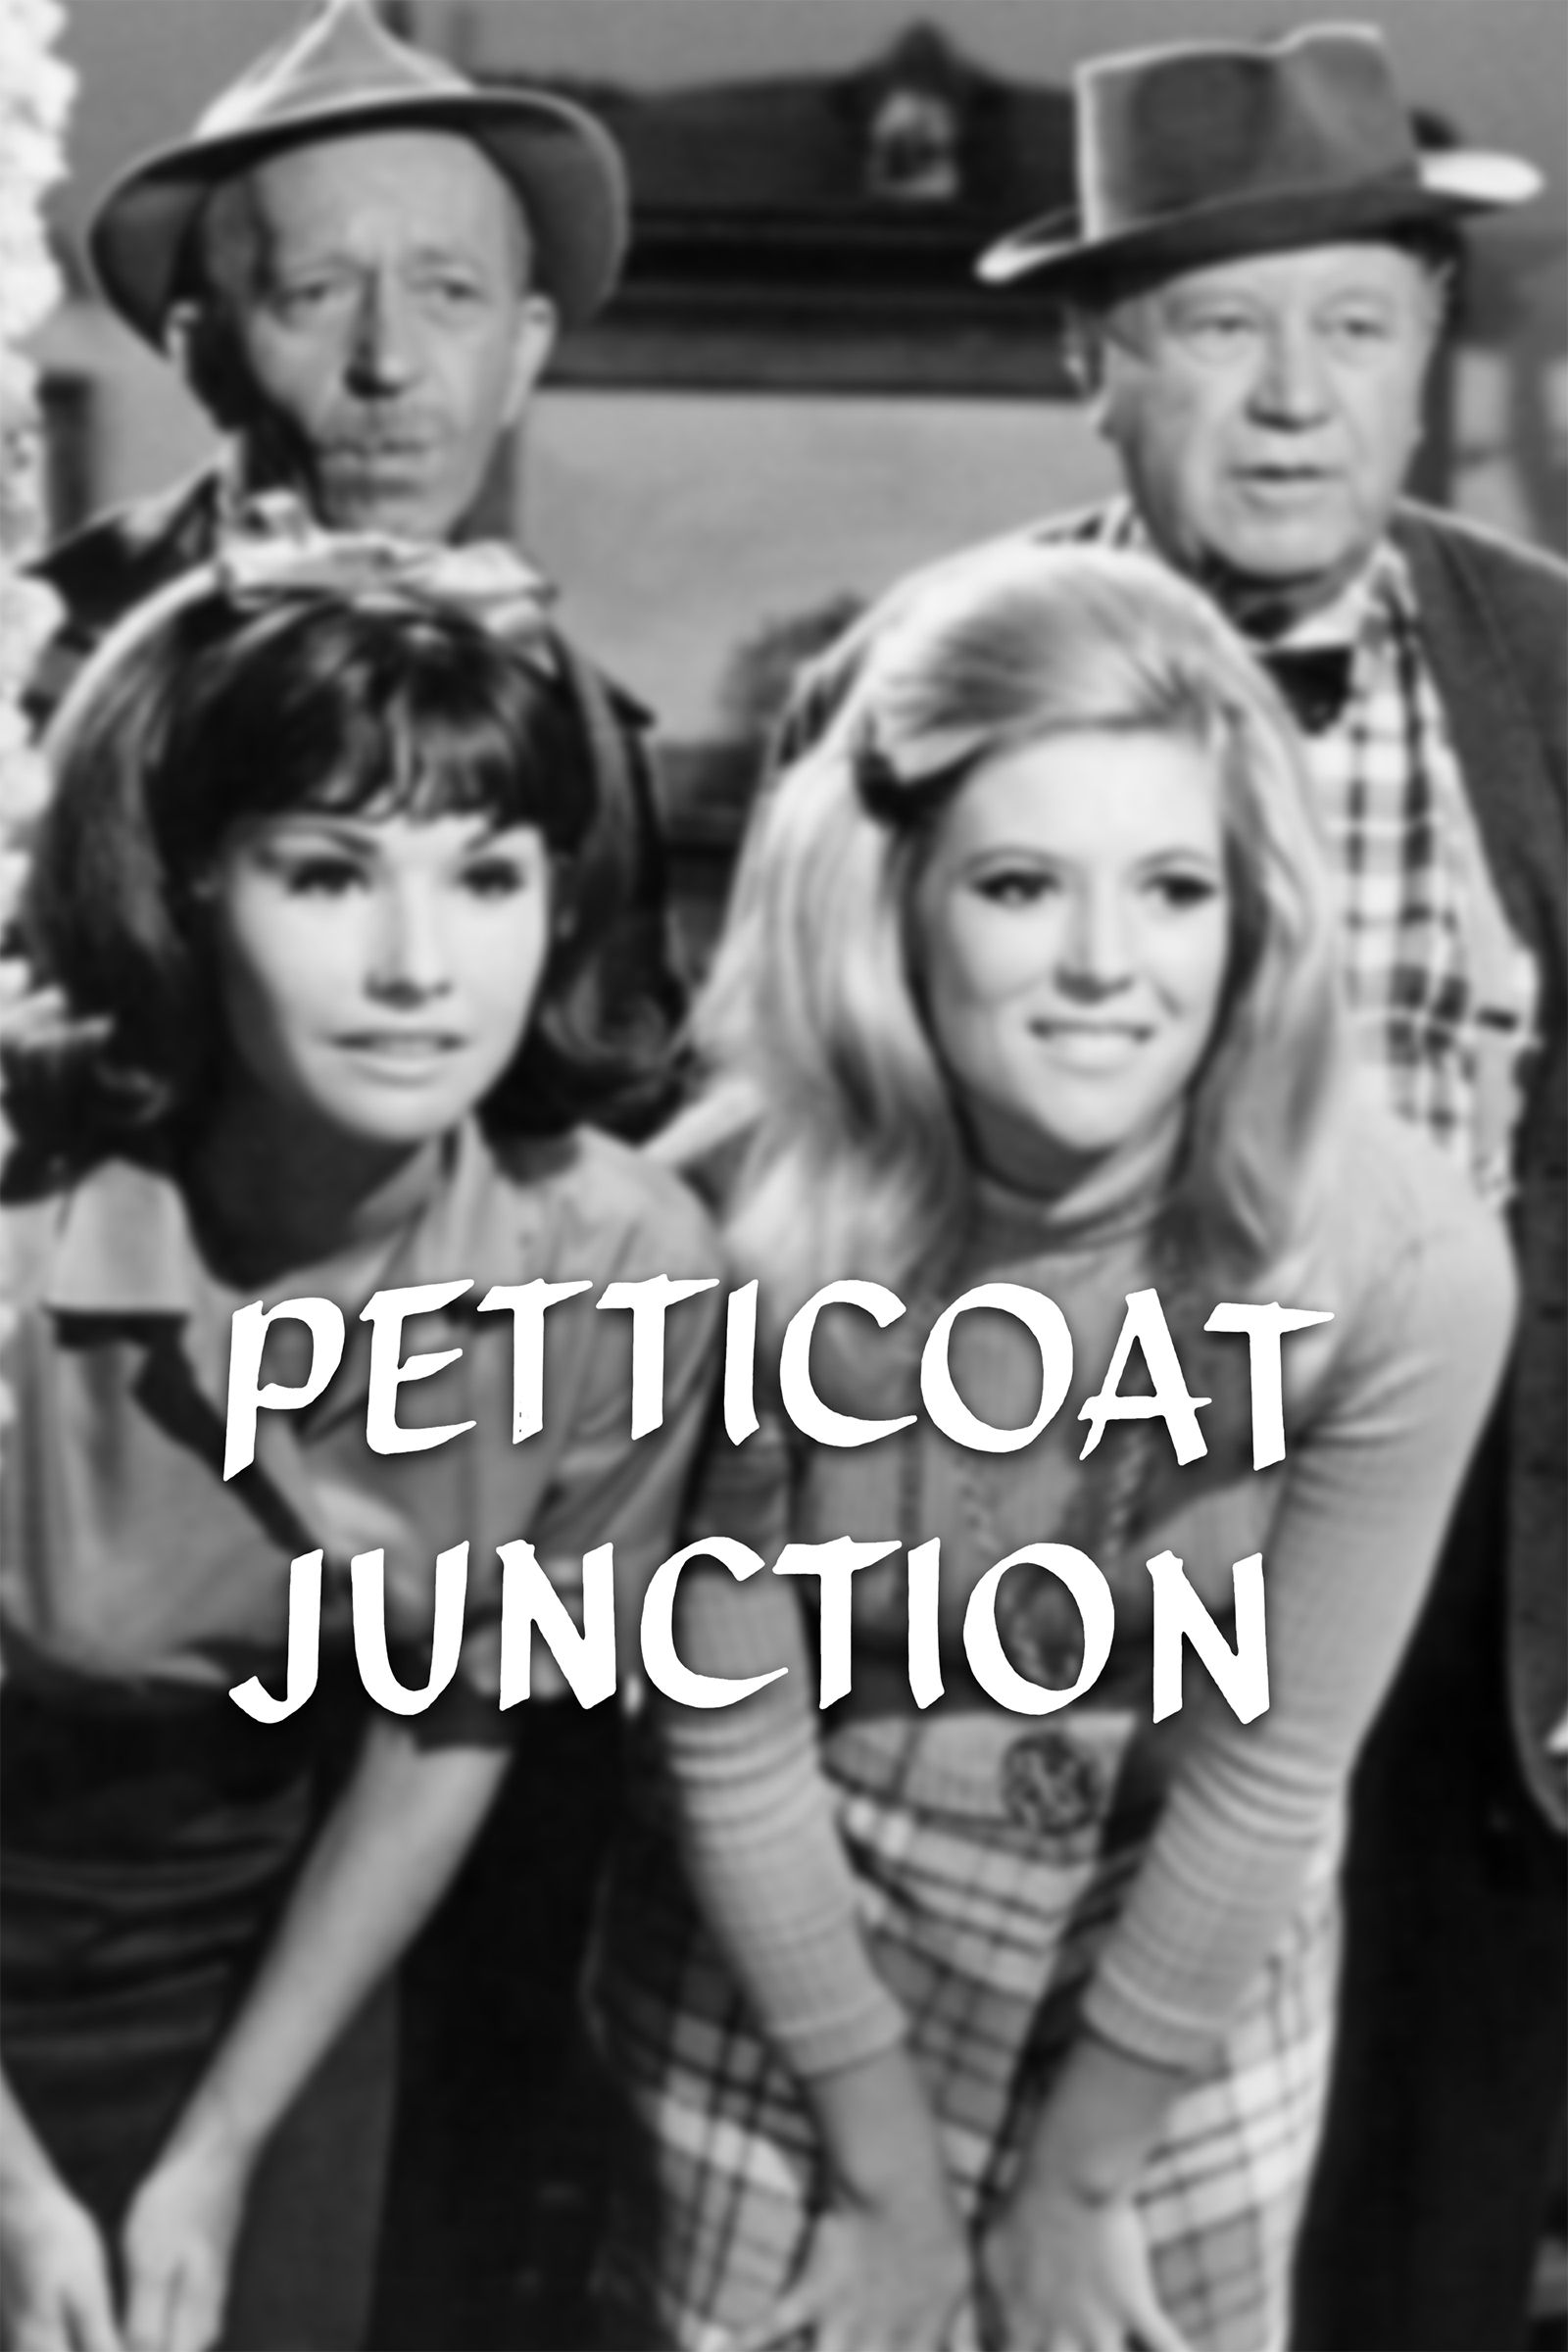 petticoat junction